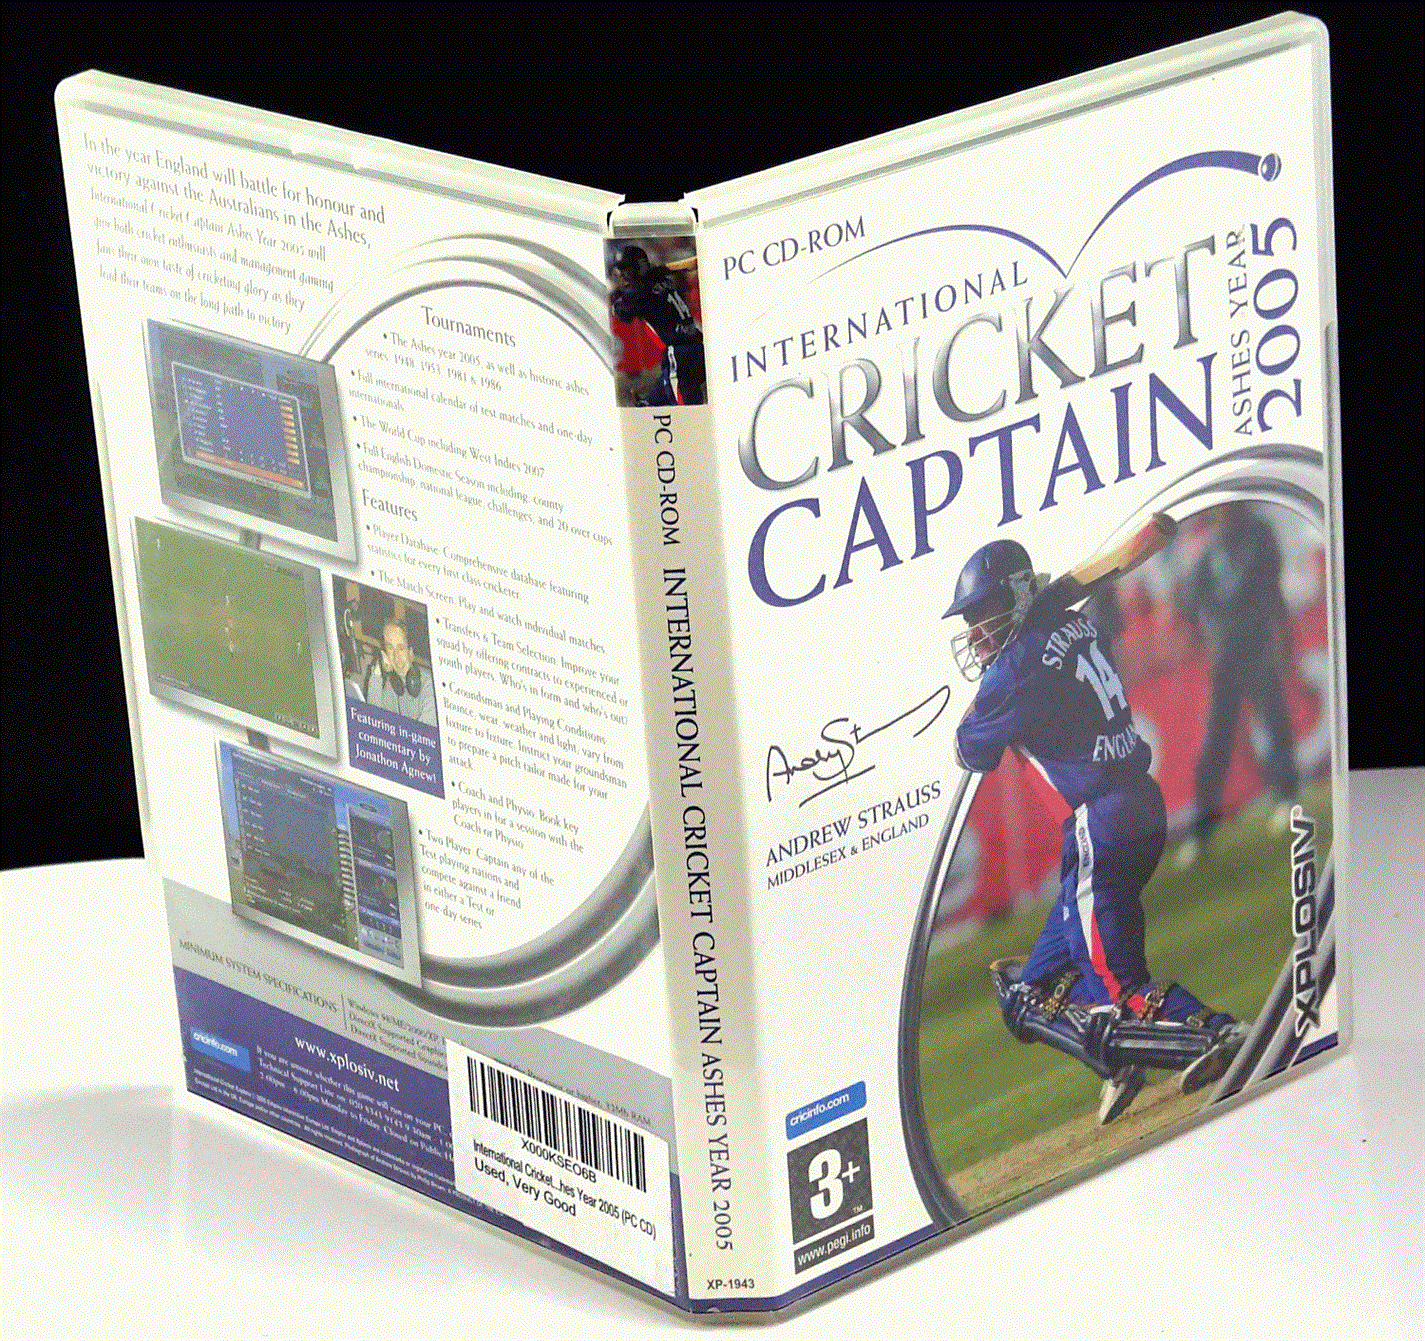 International Cricket Captain 2005 (PC) - UK Seller NP